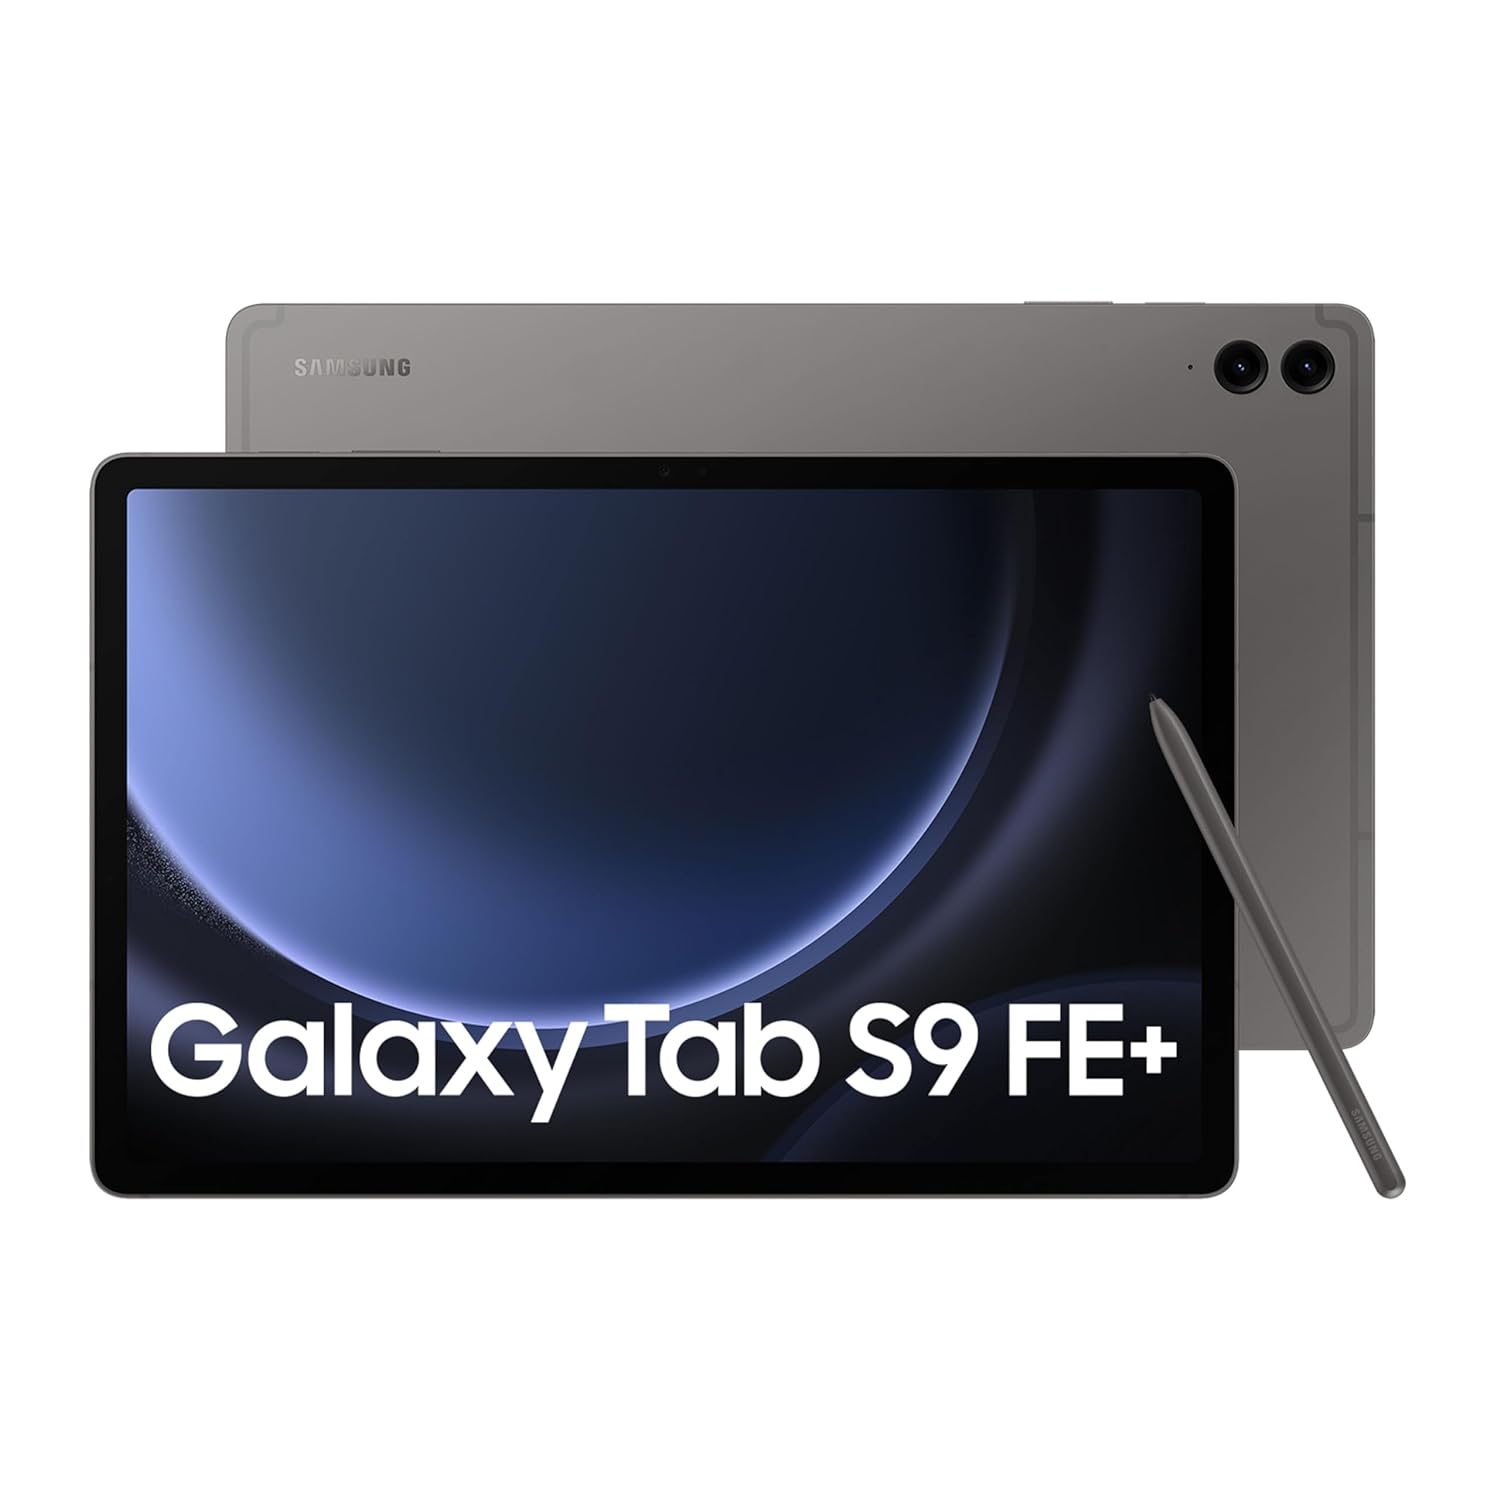 Samsung Galaxy Tab S9 FE+ 31.50 cm (12.4 inch) Display, RAM 8 GB, ROM 128 GB Expandable, S Pen in-Box, WiFi+5G, IP68 Tablet, Gray - Mahajan Electronics Online